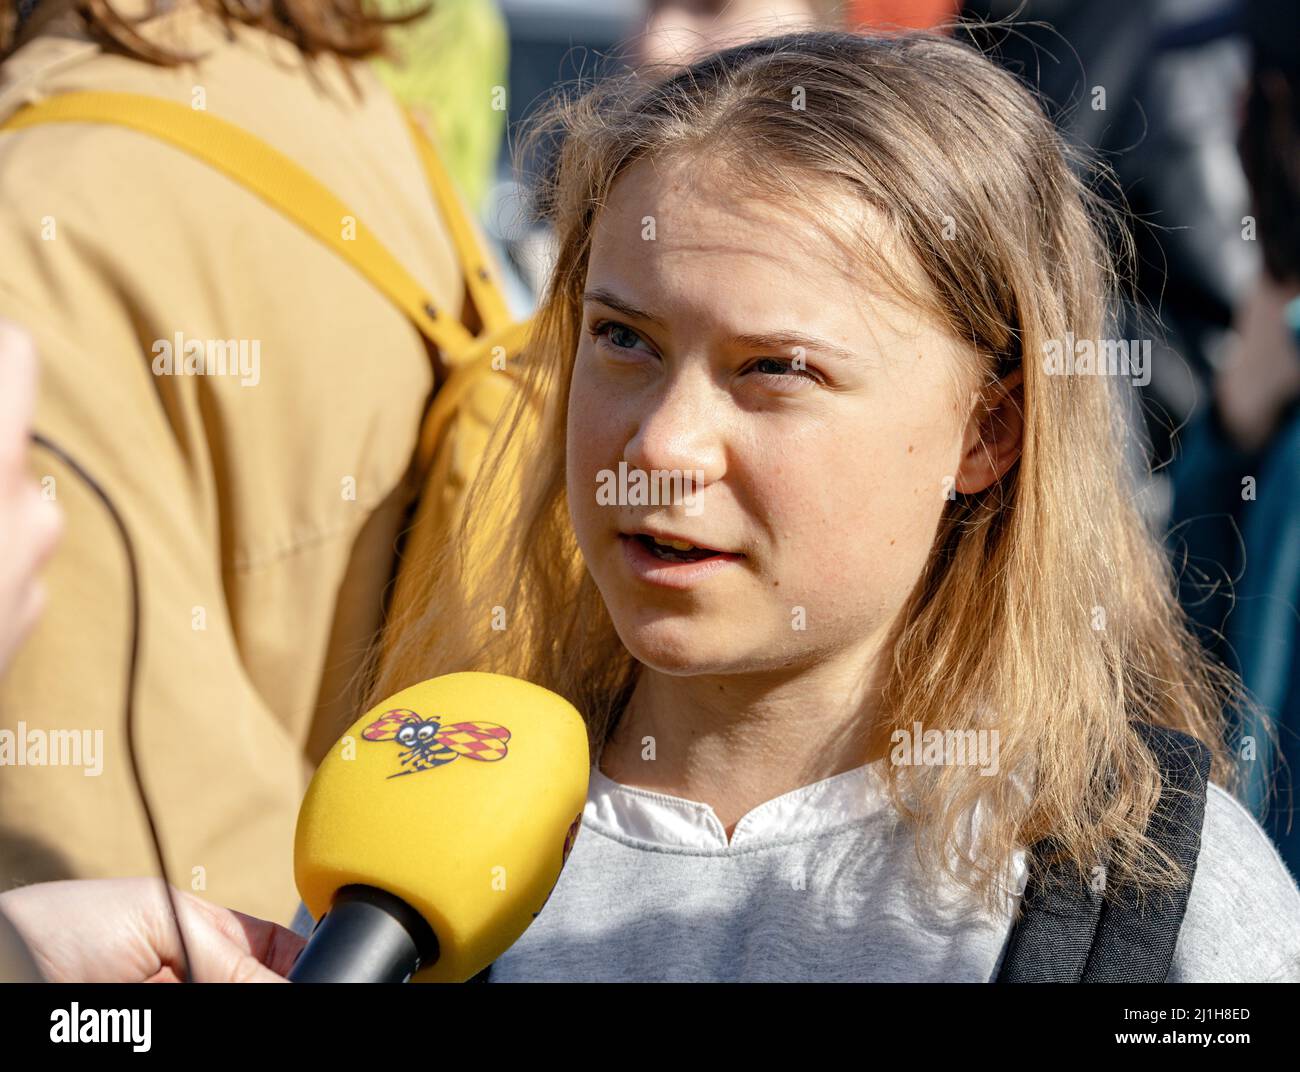 STOCKHOLM, SWEDEN - MARCH 25, 2022: 19-year-old Swedish climate activist Greta Thunberg demonstrating in Stockholm on Fridays. Stock Photo